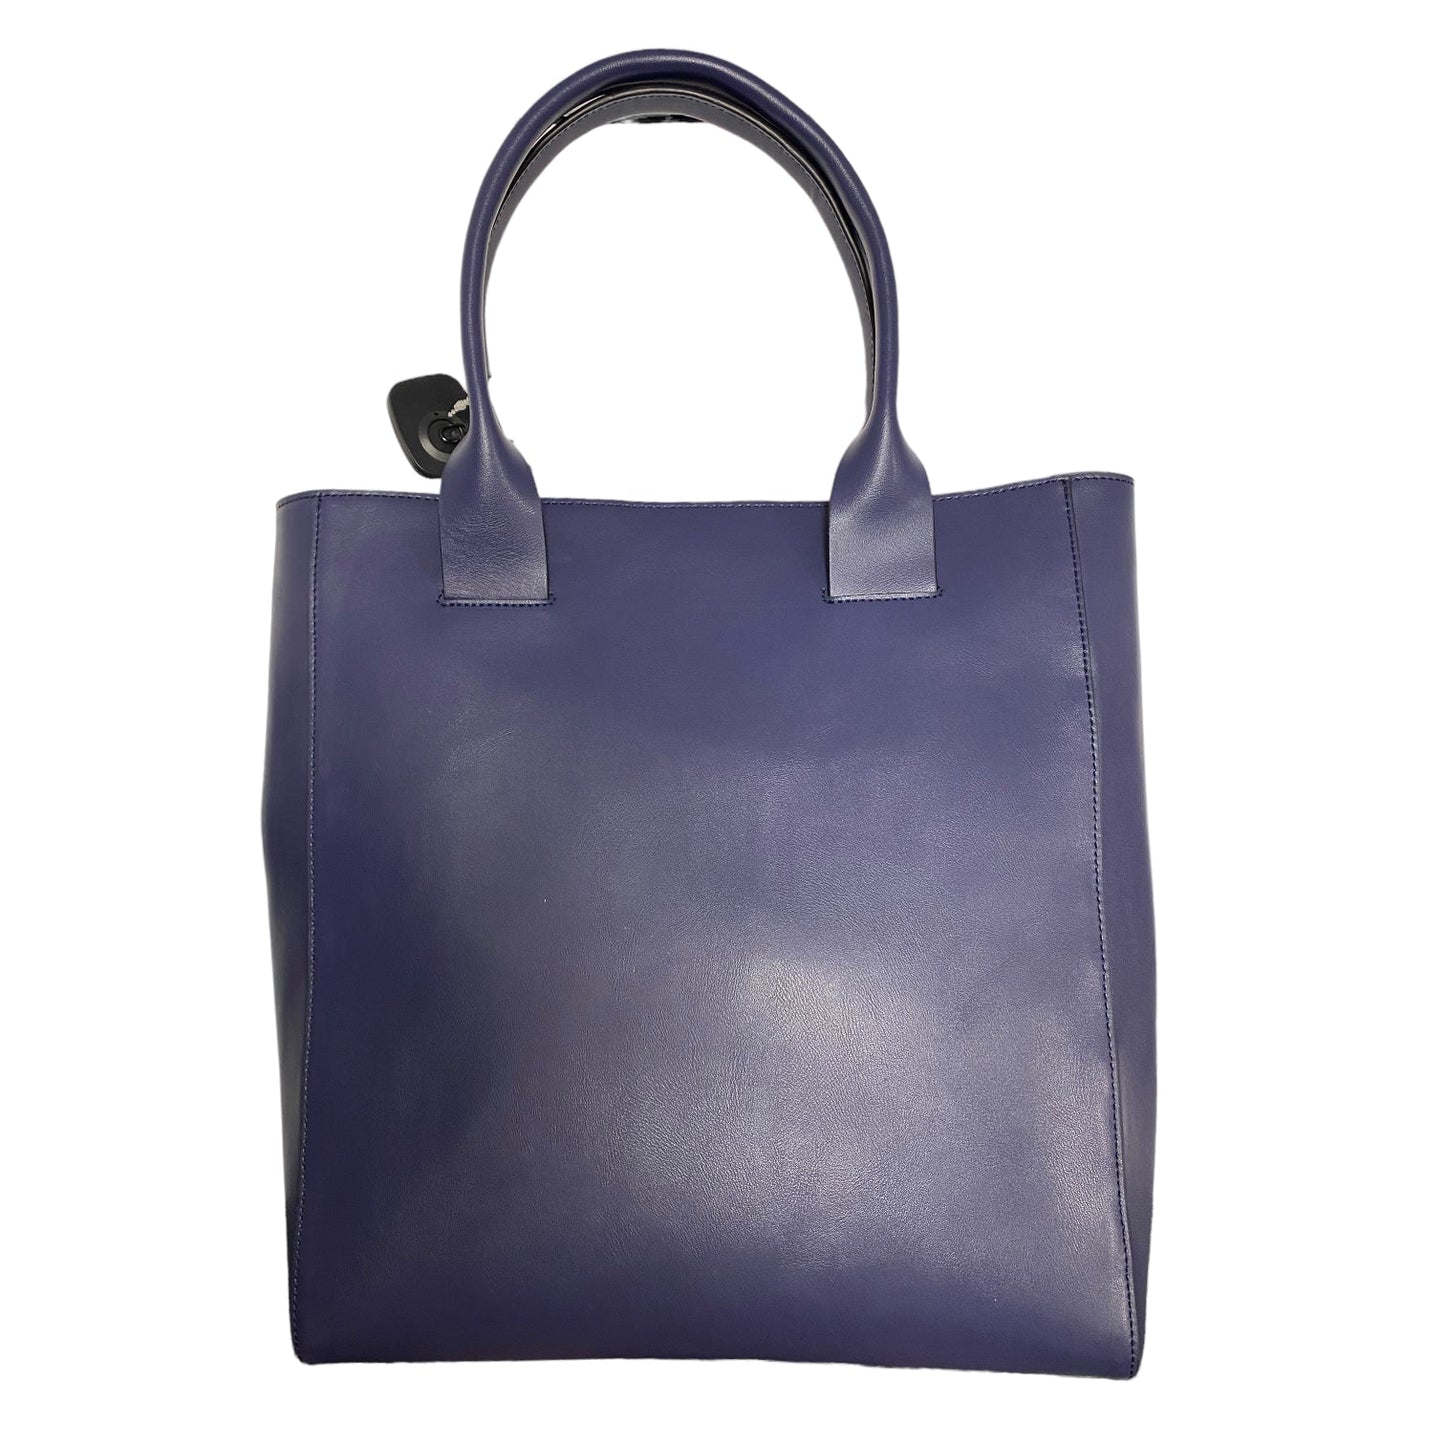 Handbag Leather By Bcbgmaxazria  Size: Large